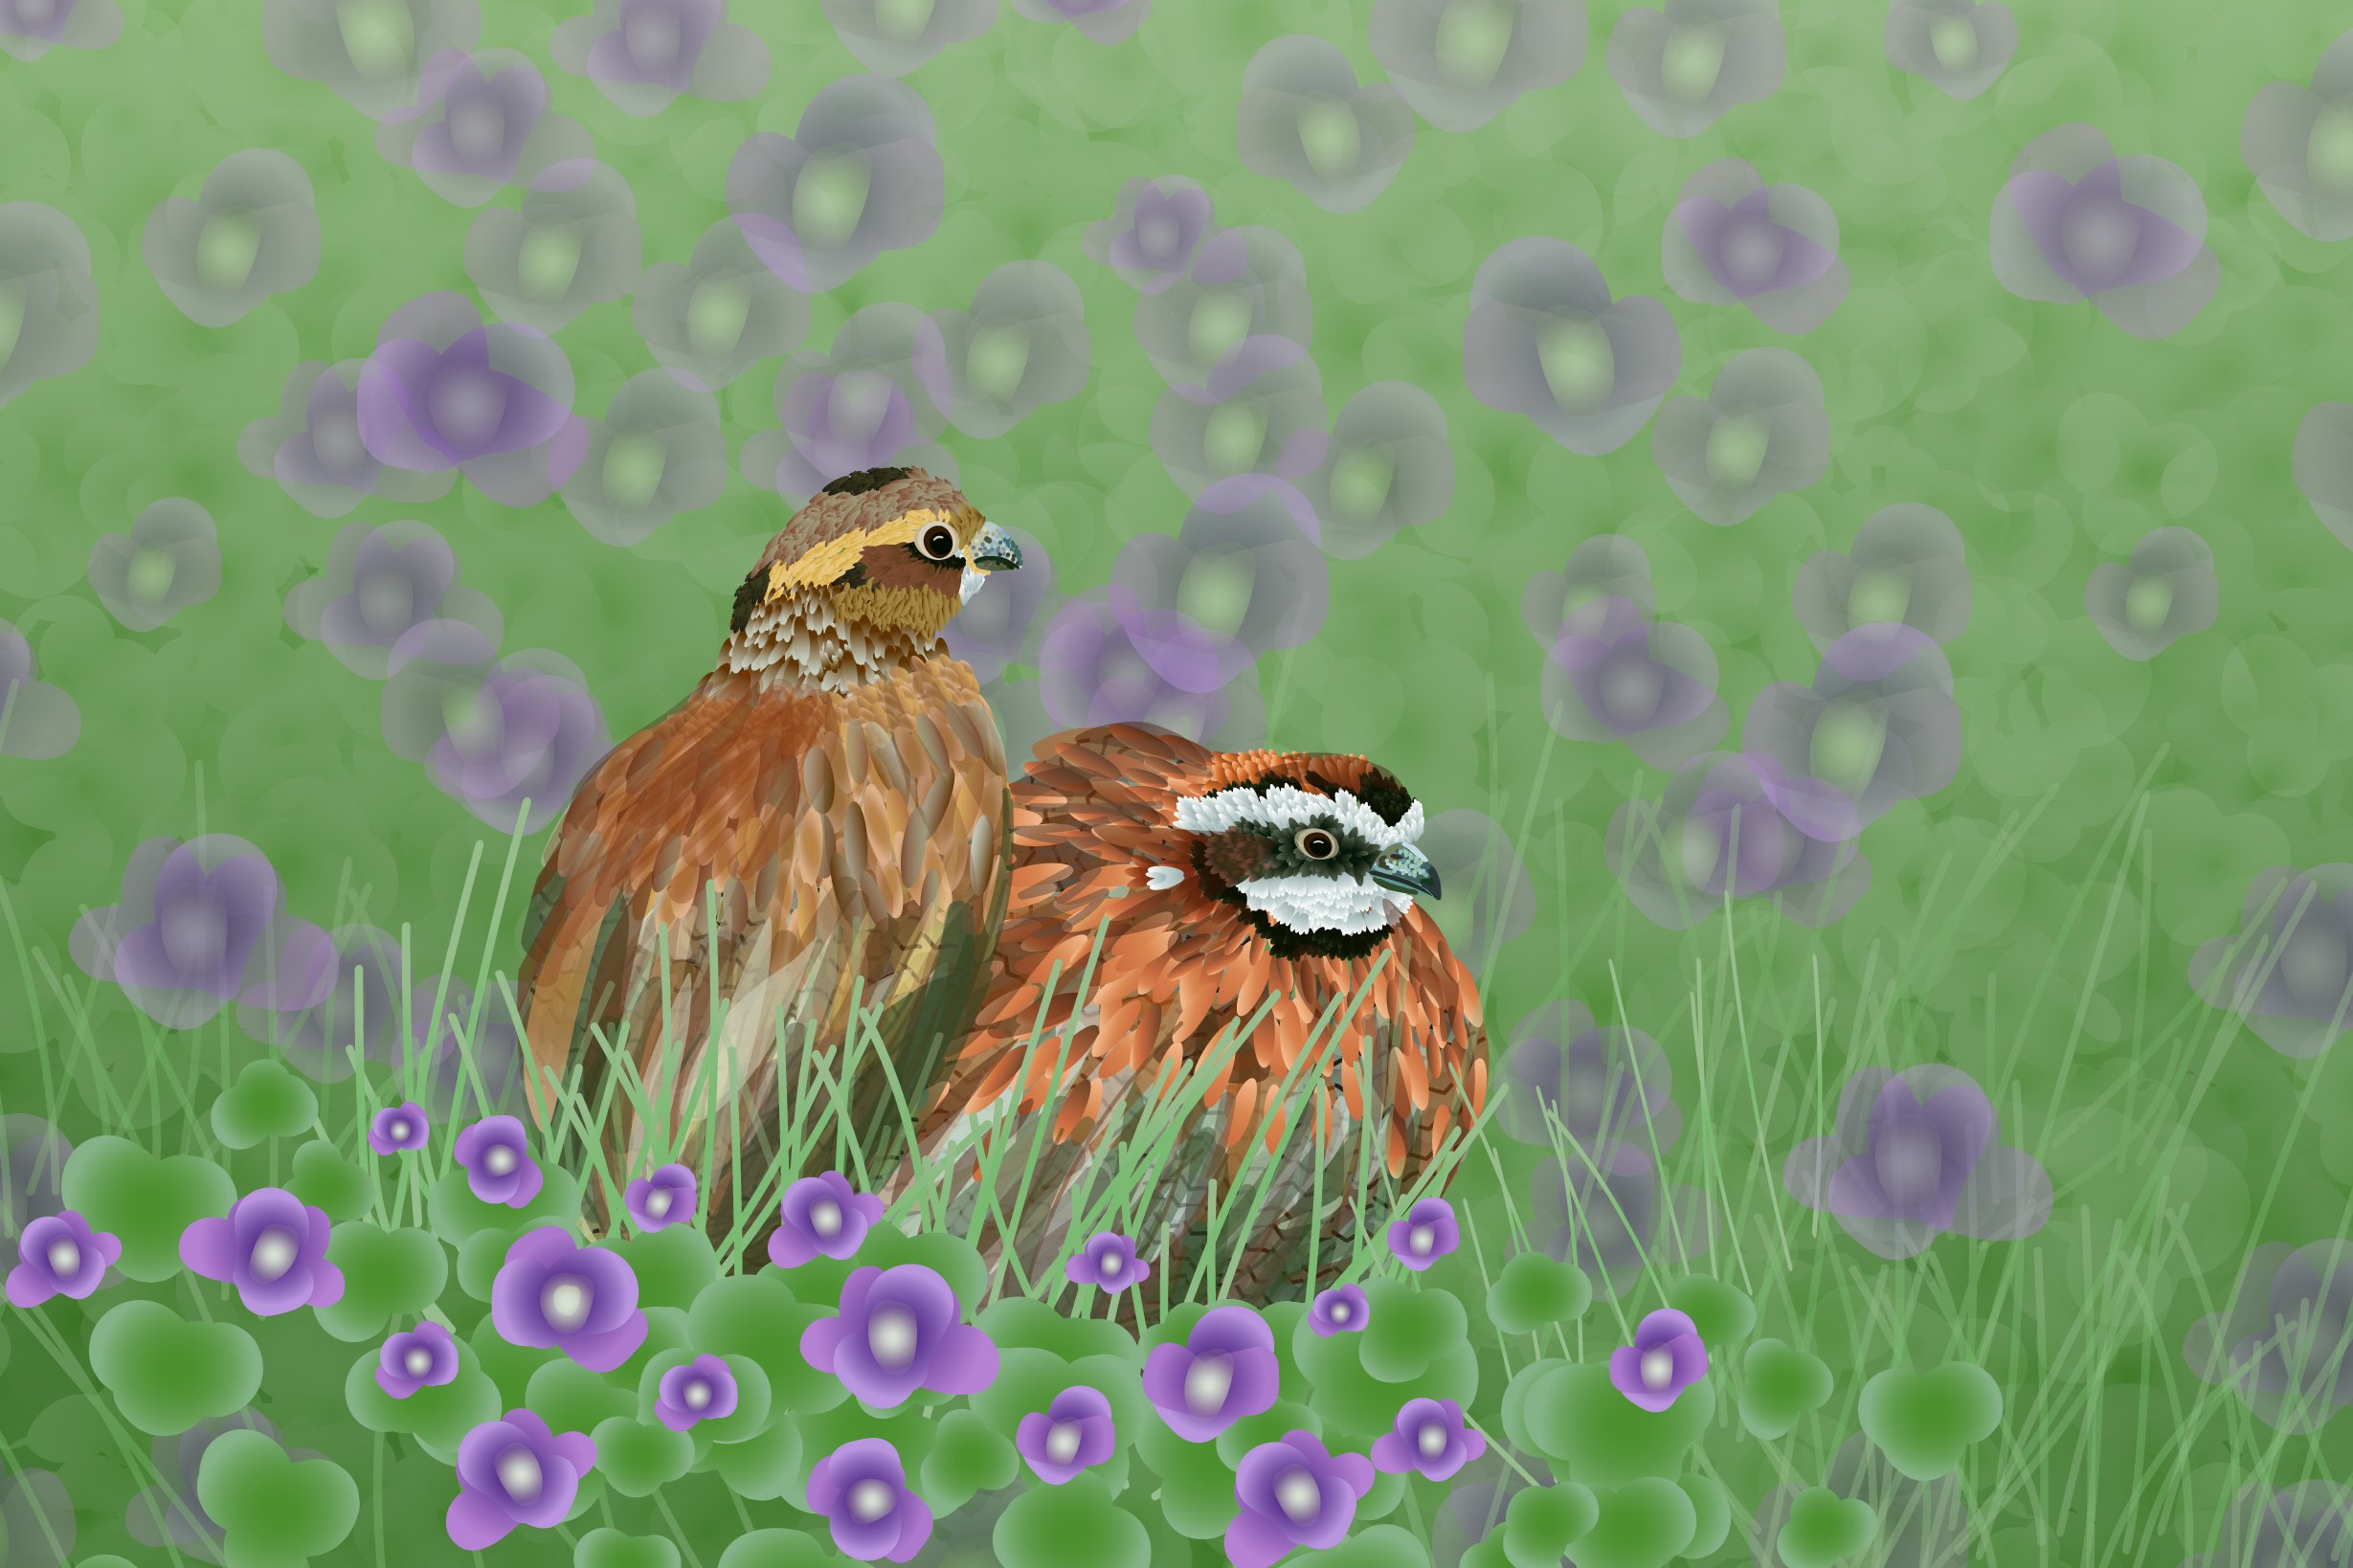 Quail birds drawn in Adobe Illustrator